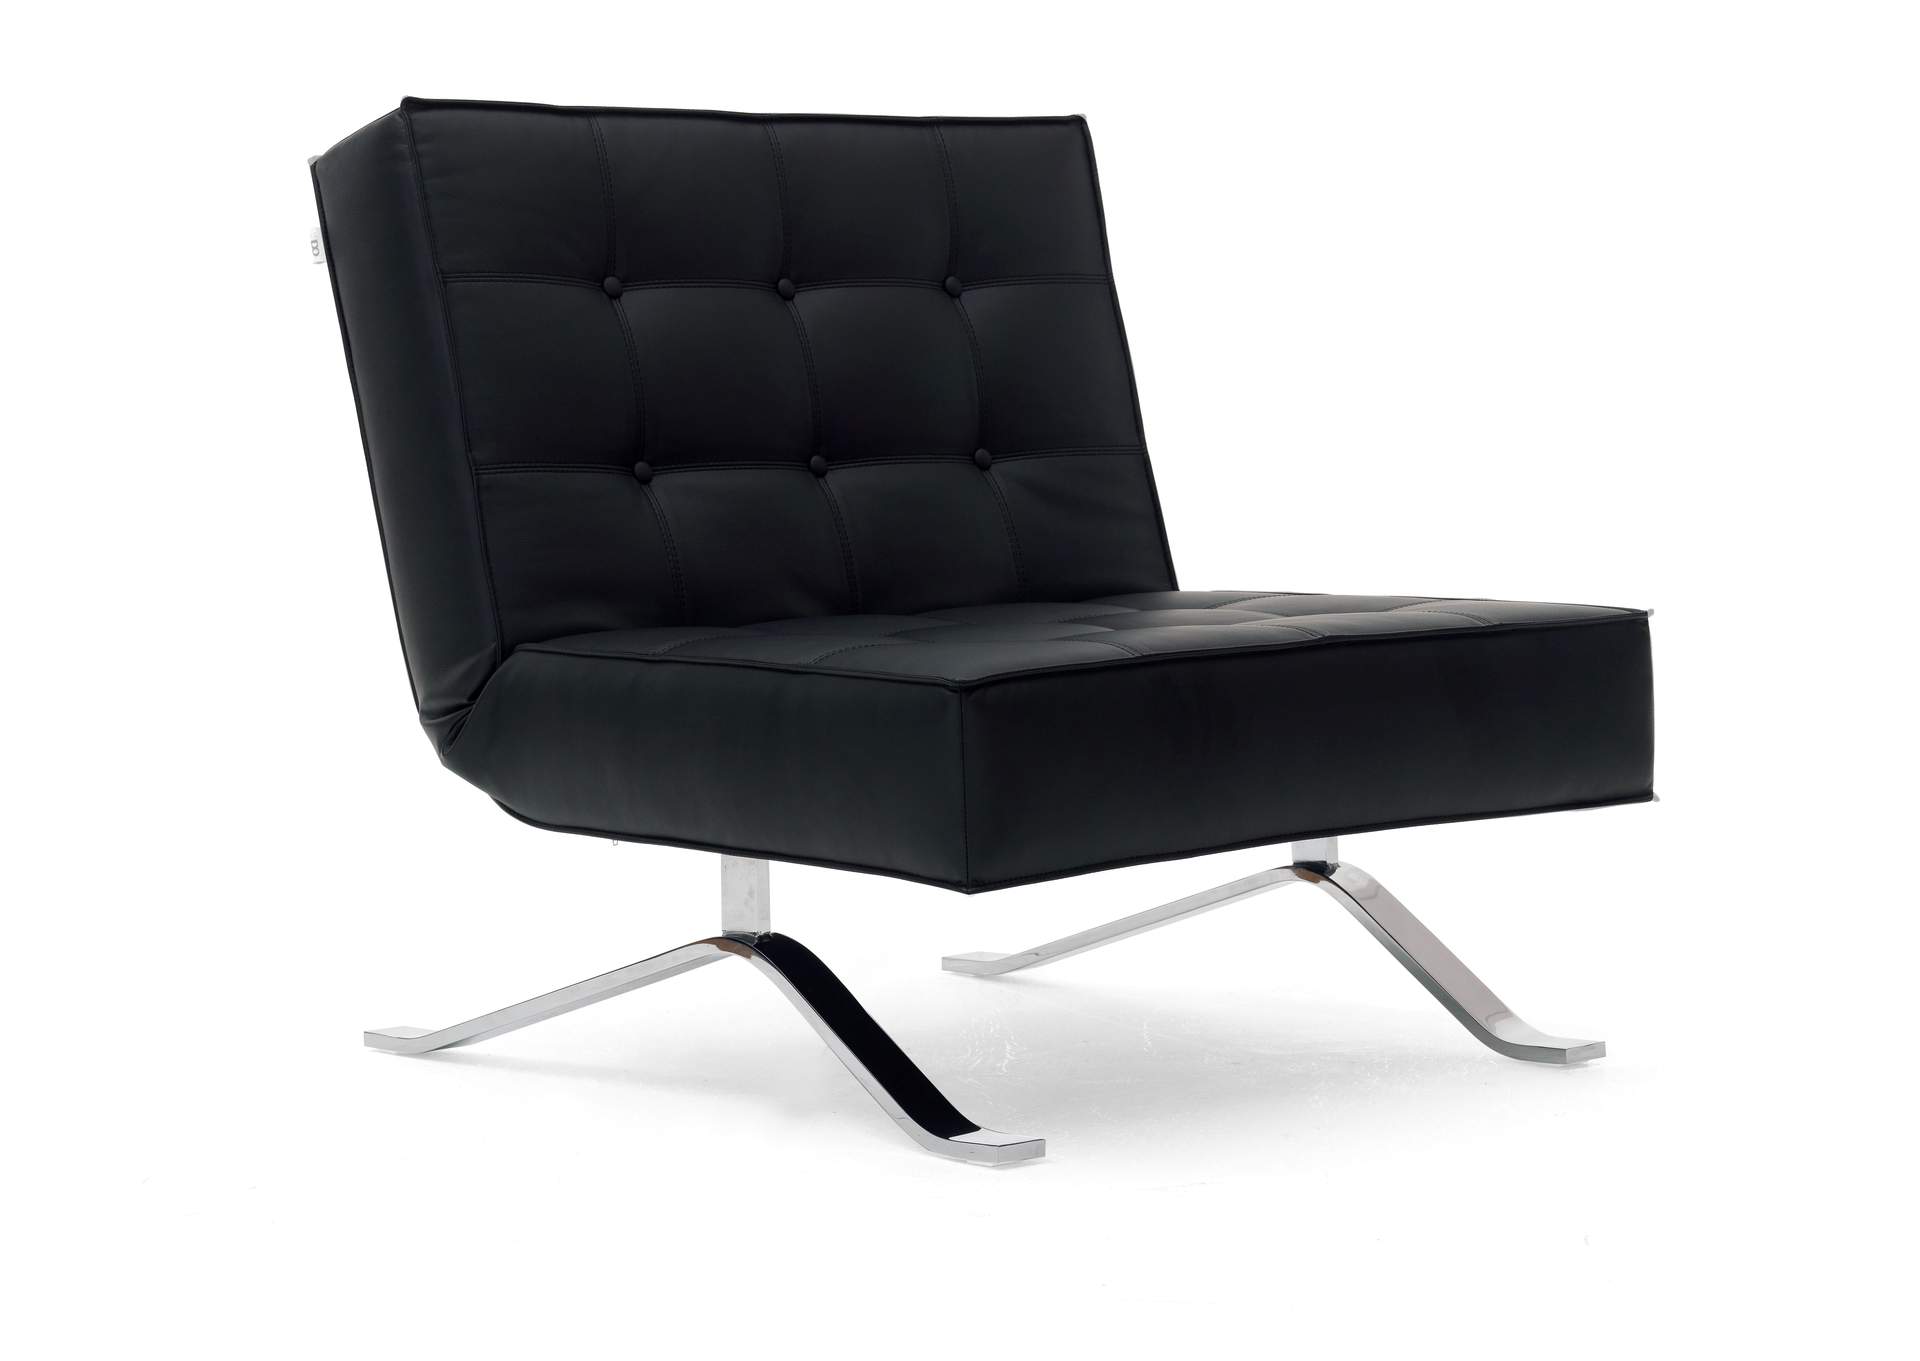 Premium Chair Bed JK044-1 in Black Leatherette,J&M Furniture